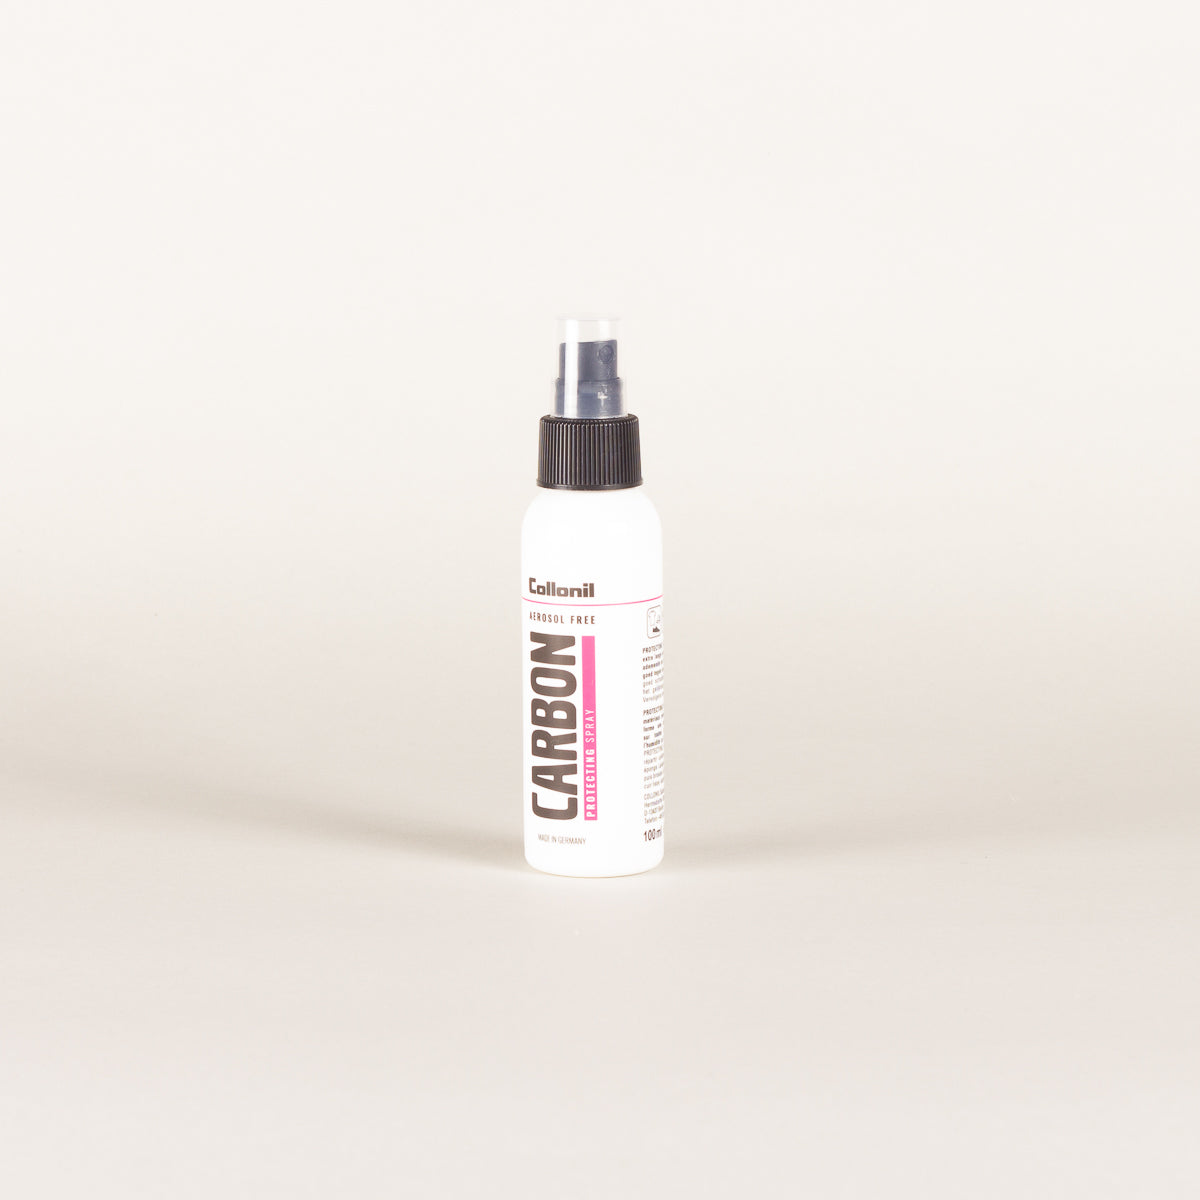 Collonil Carbon protecting spray aerosol free